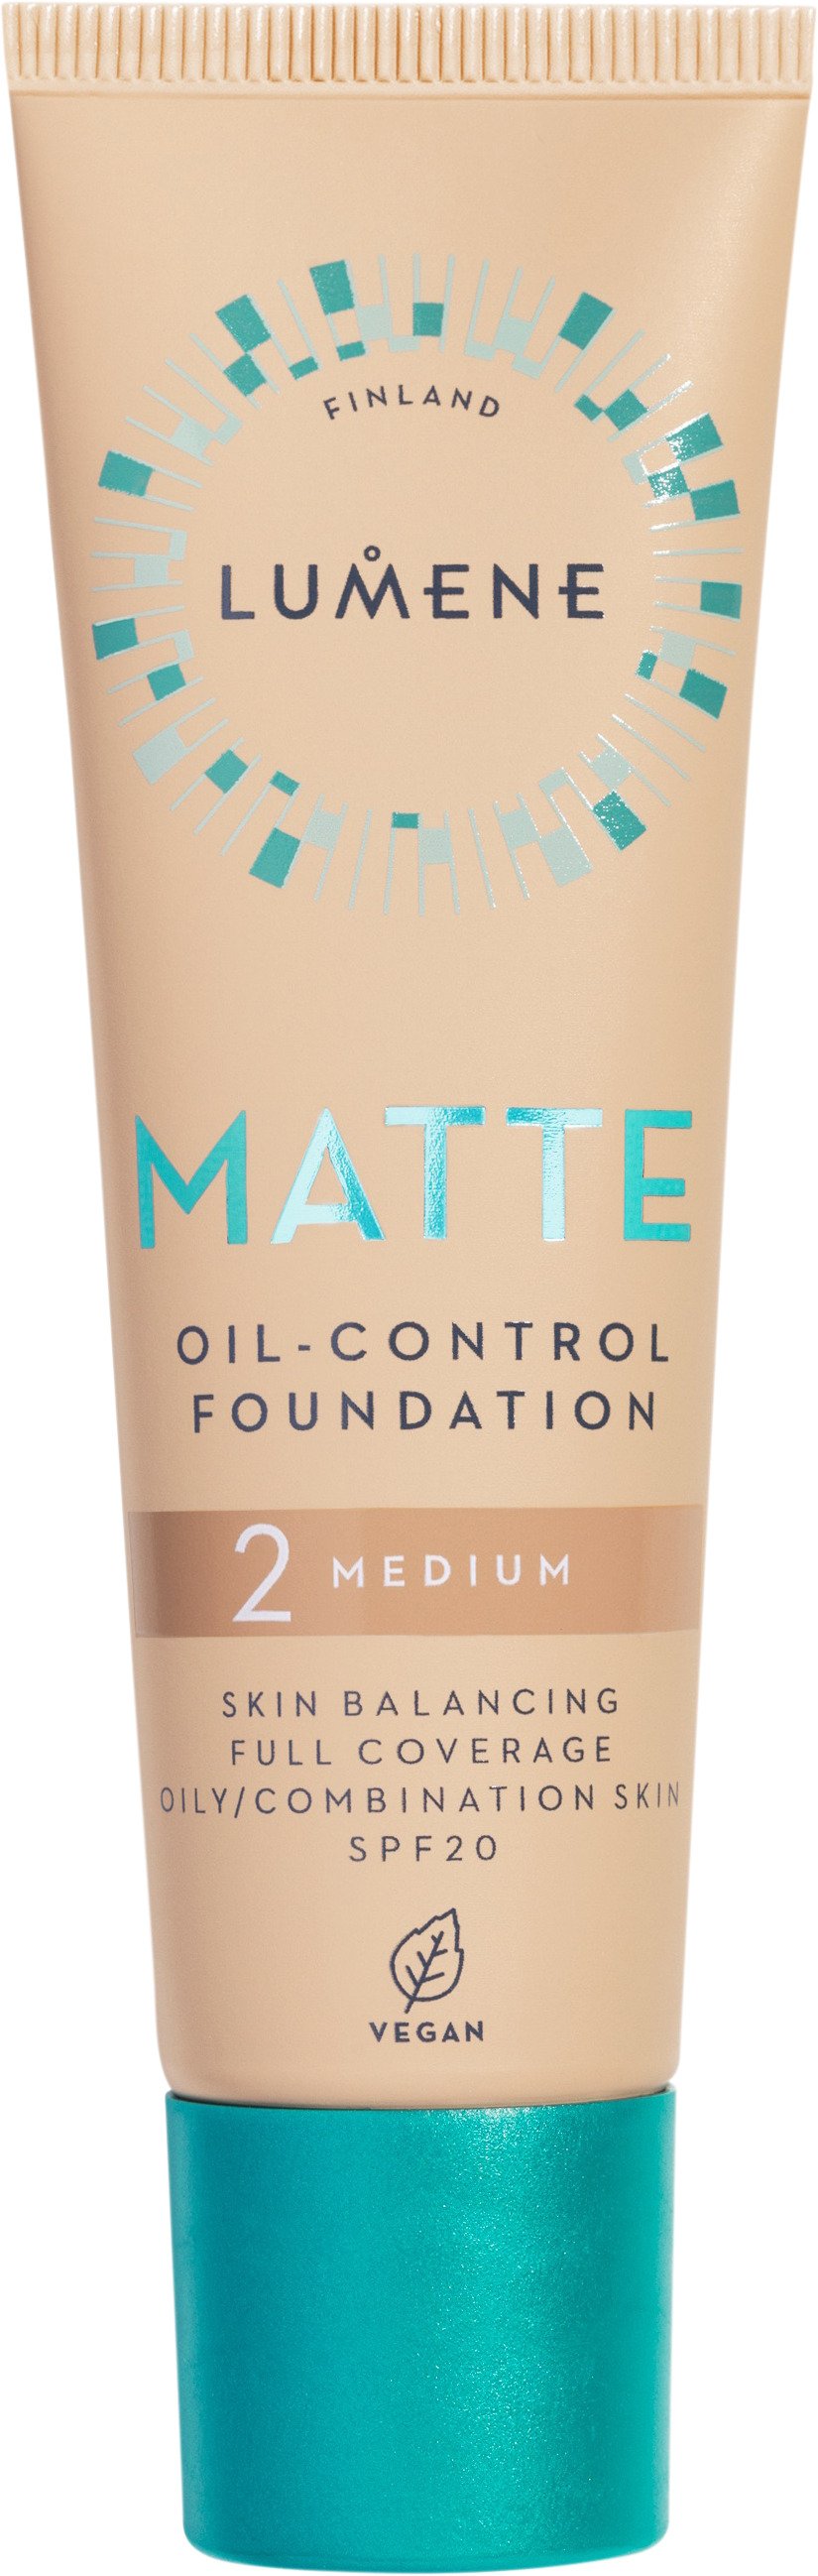 Lumene Matte Oil-Control Foundation SPF20 2 Medium 30 ml